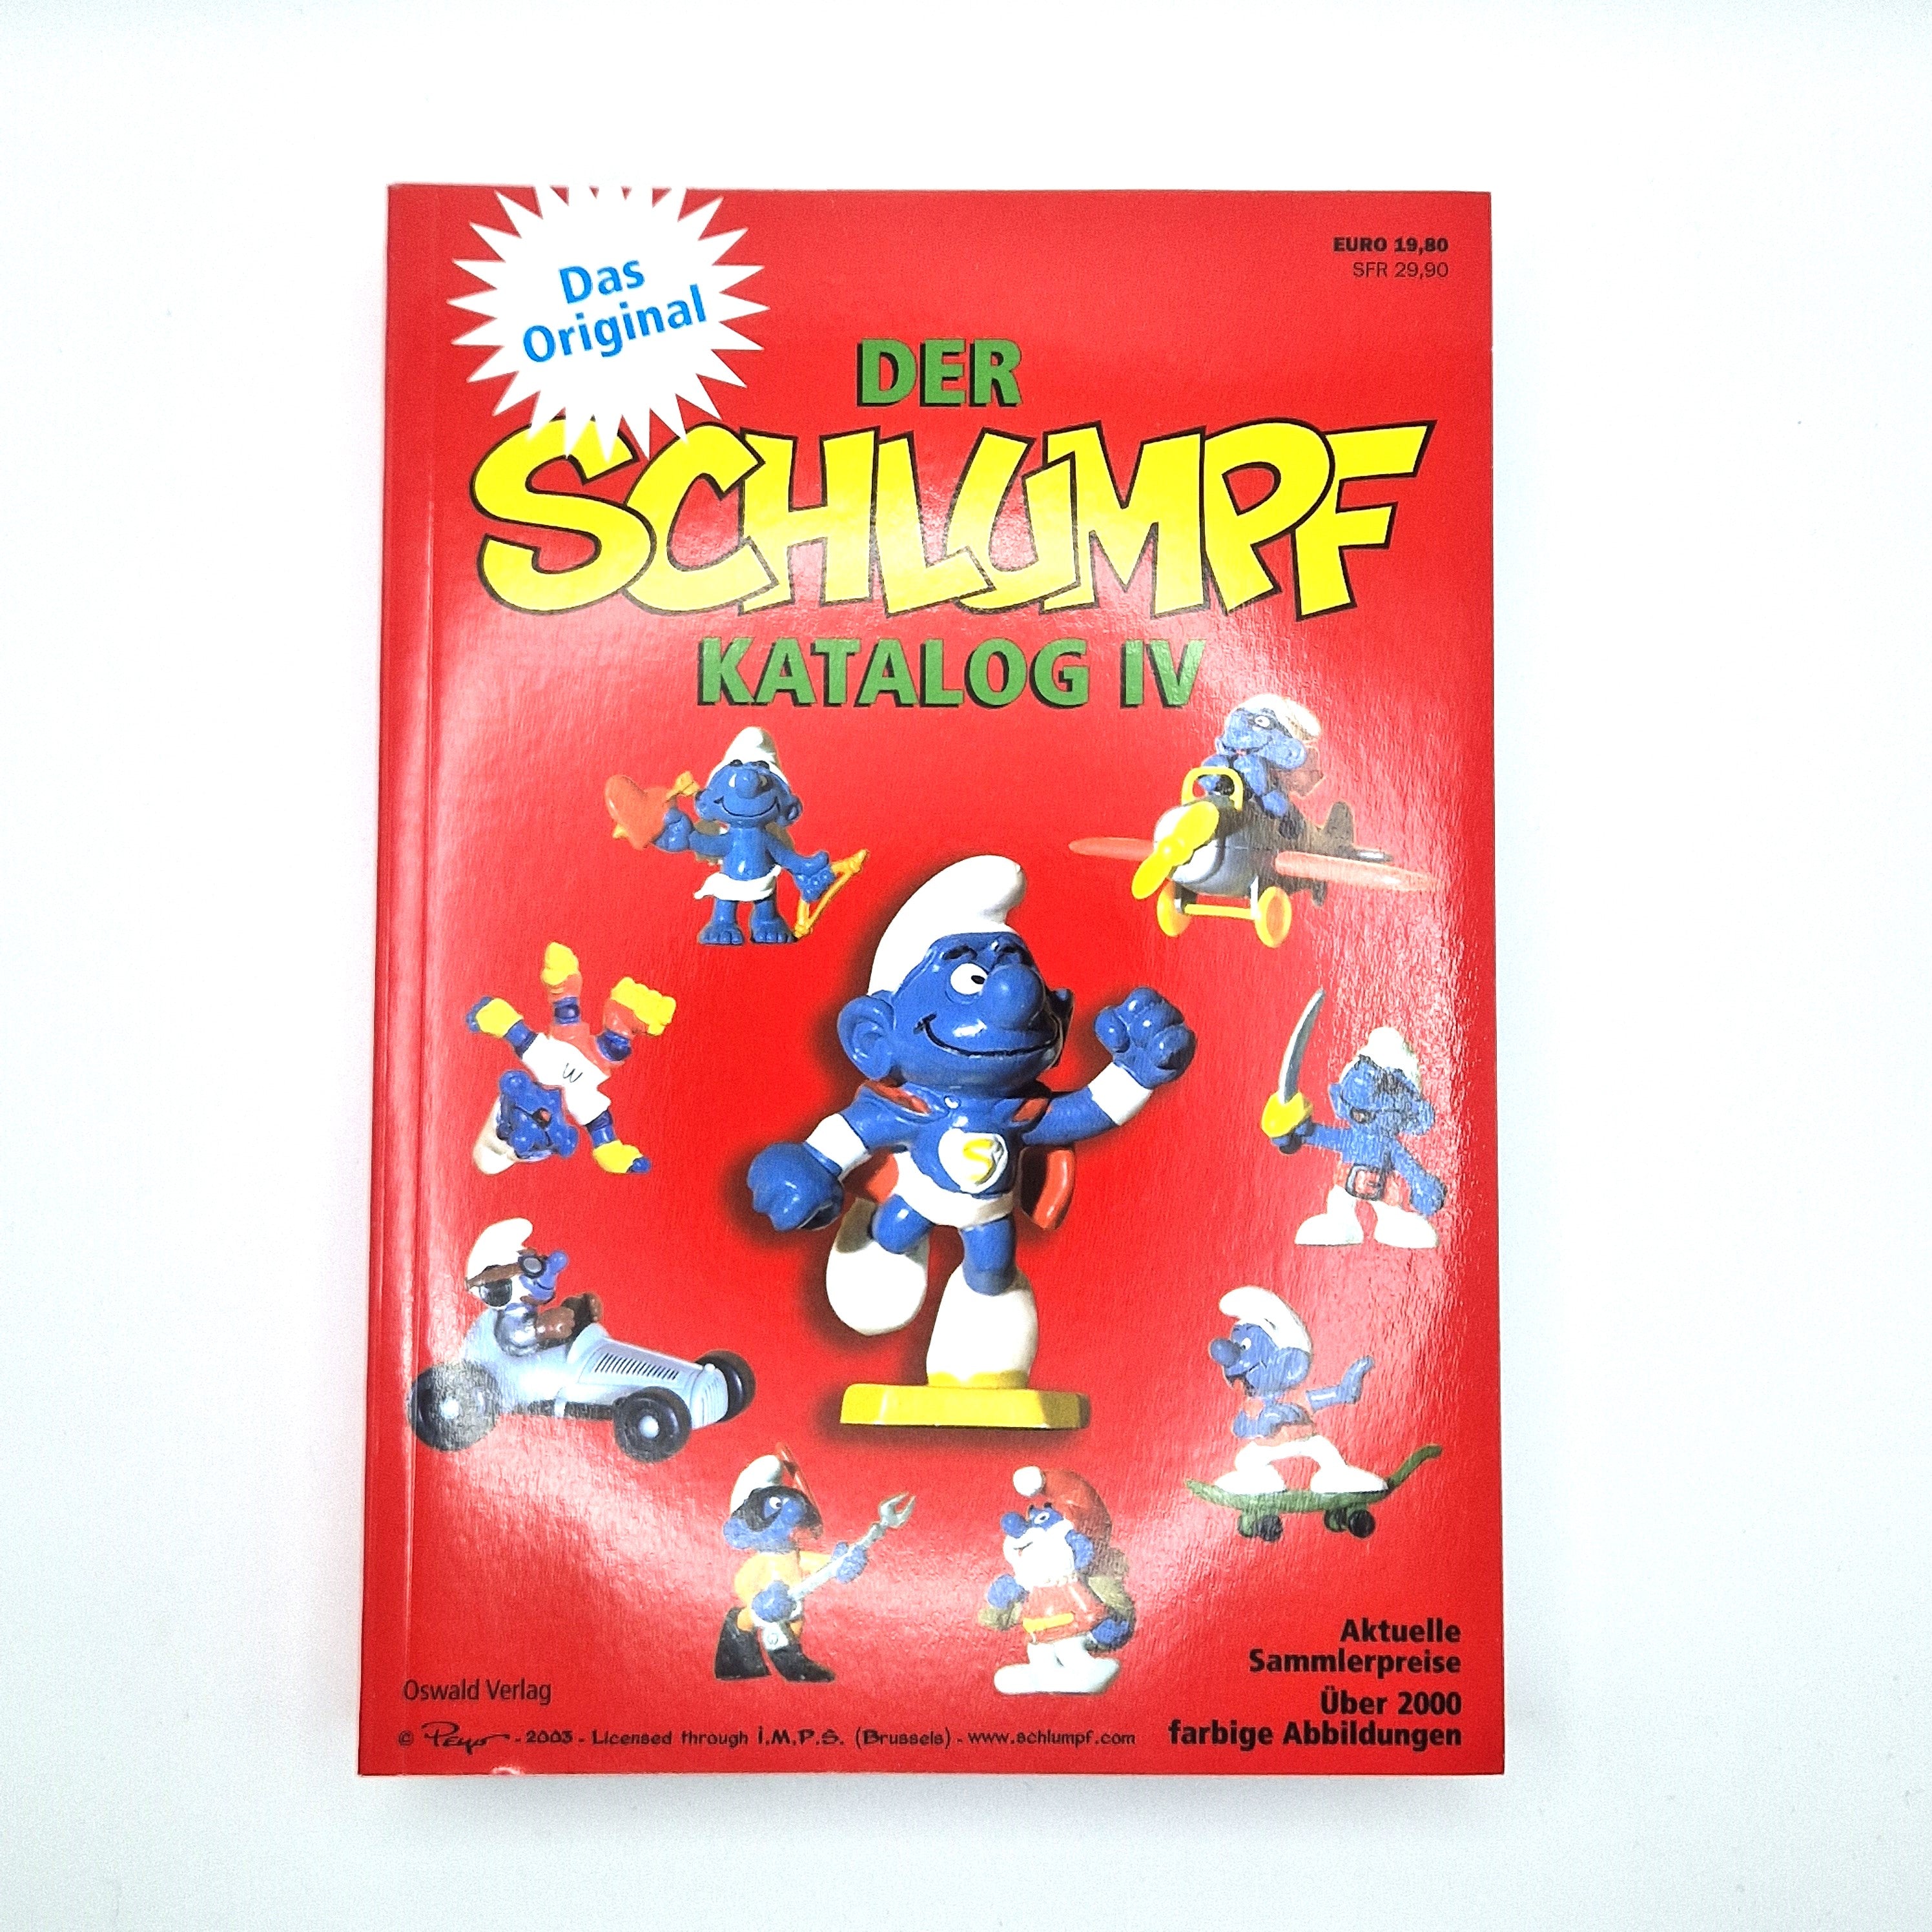 Der Schlumpf Katalog 4 IV Sammlerkatalog  Oswald verlag   